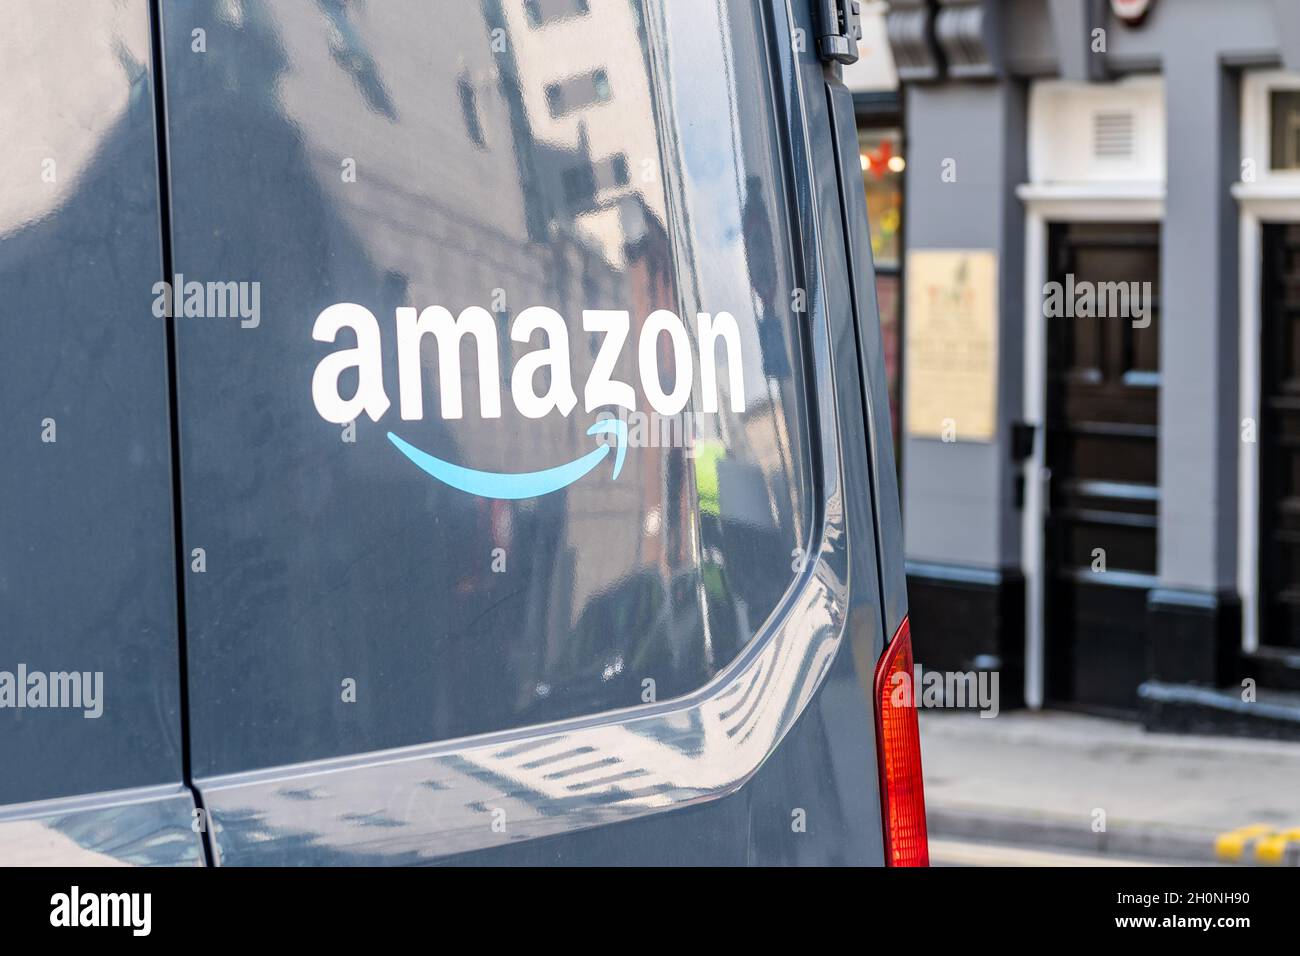 Amazon logo on an Amazon Prime delivery van in Liverpool, Merseyside, UK. Stock Photo